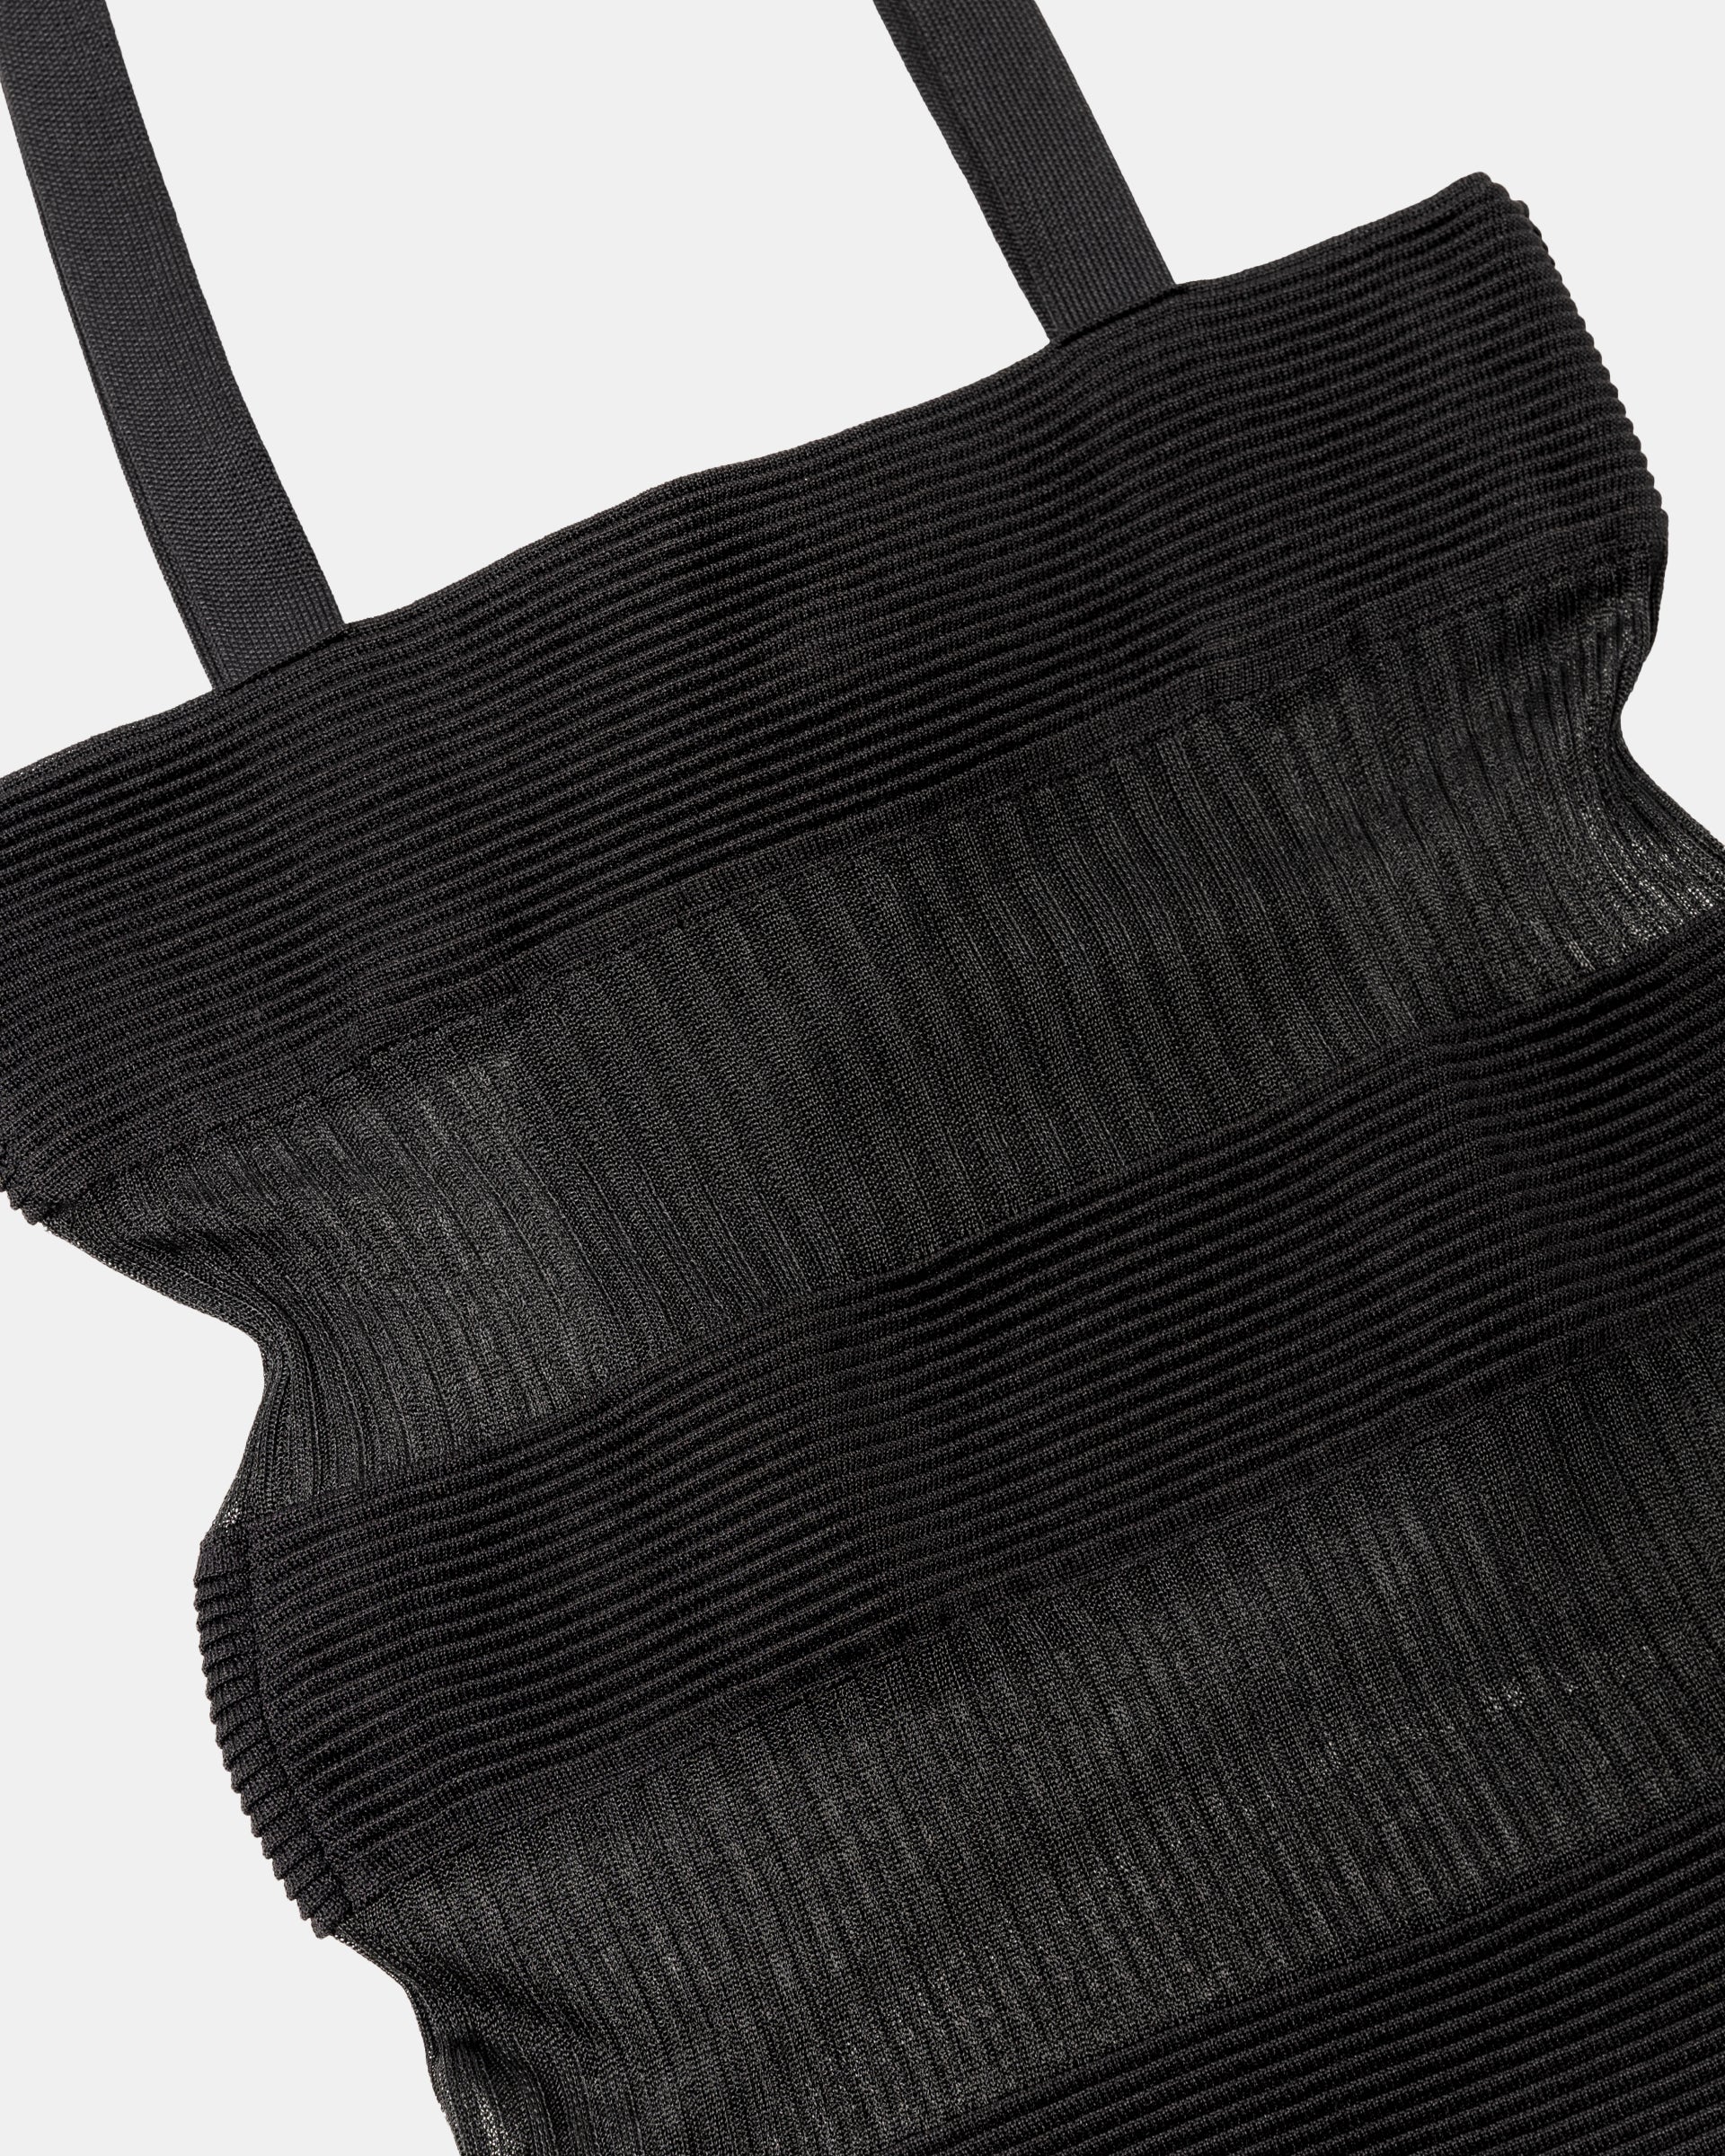 Strata Lucent Tote Bag in Black